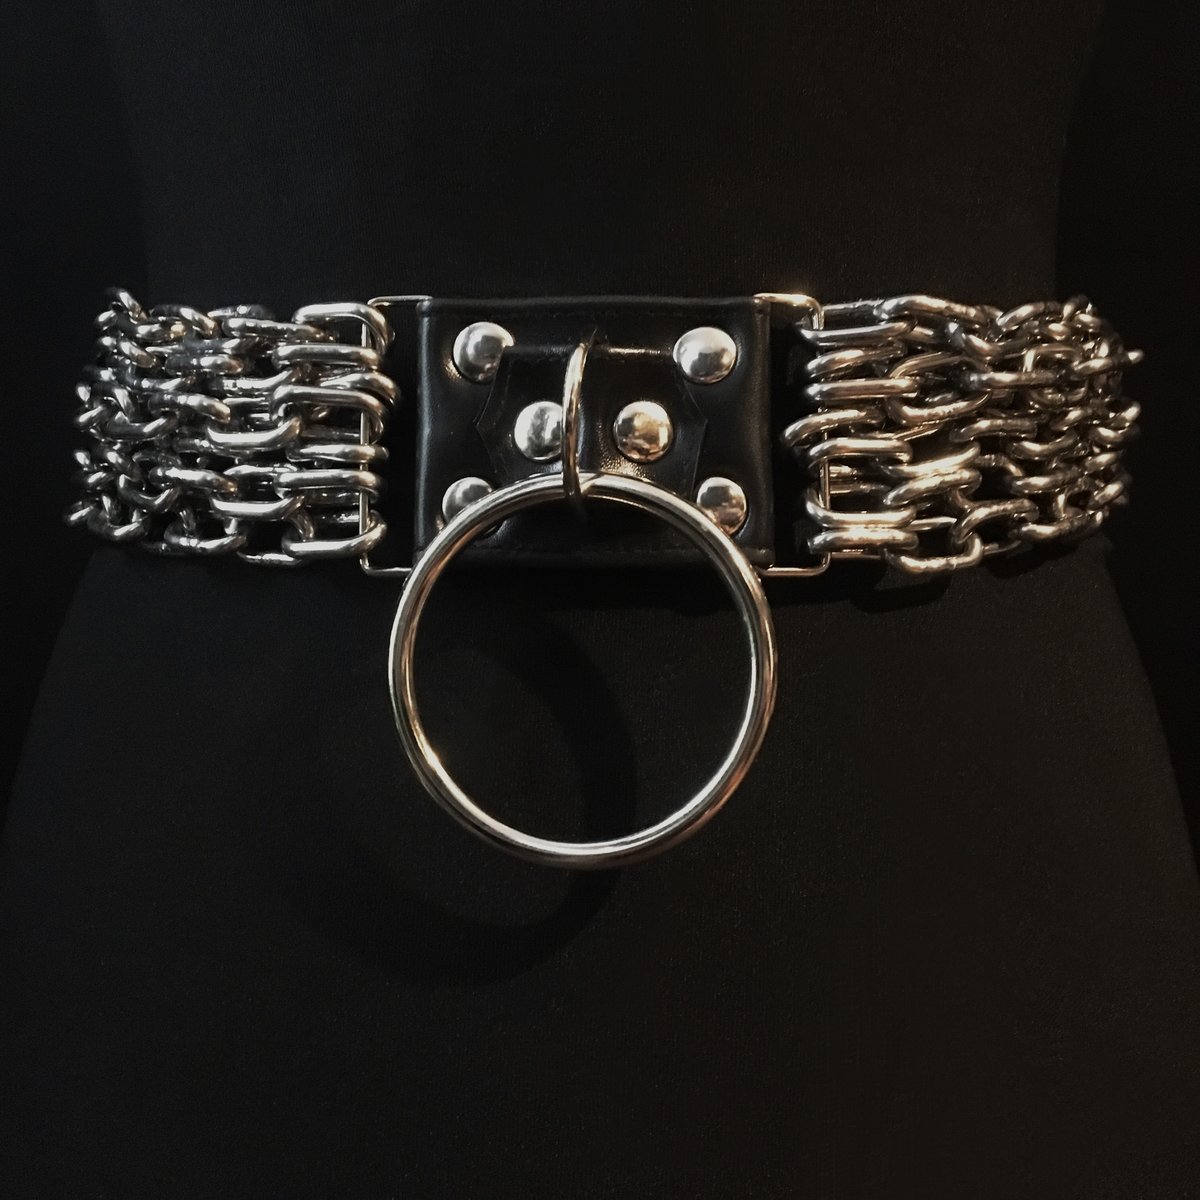 Chain and ring waist belt